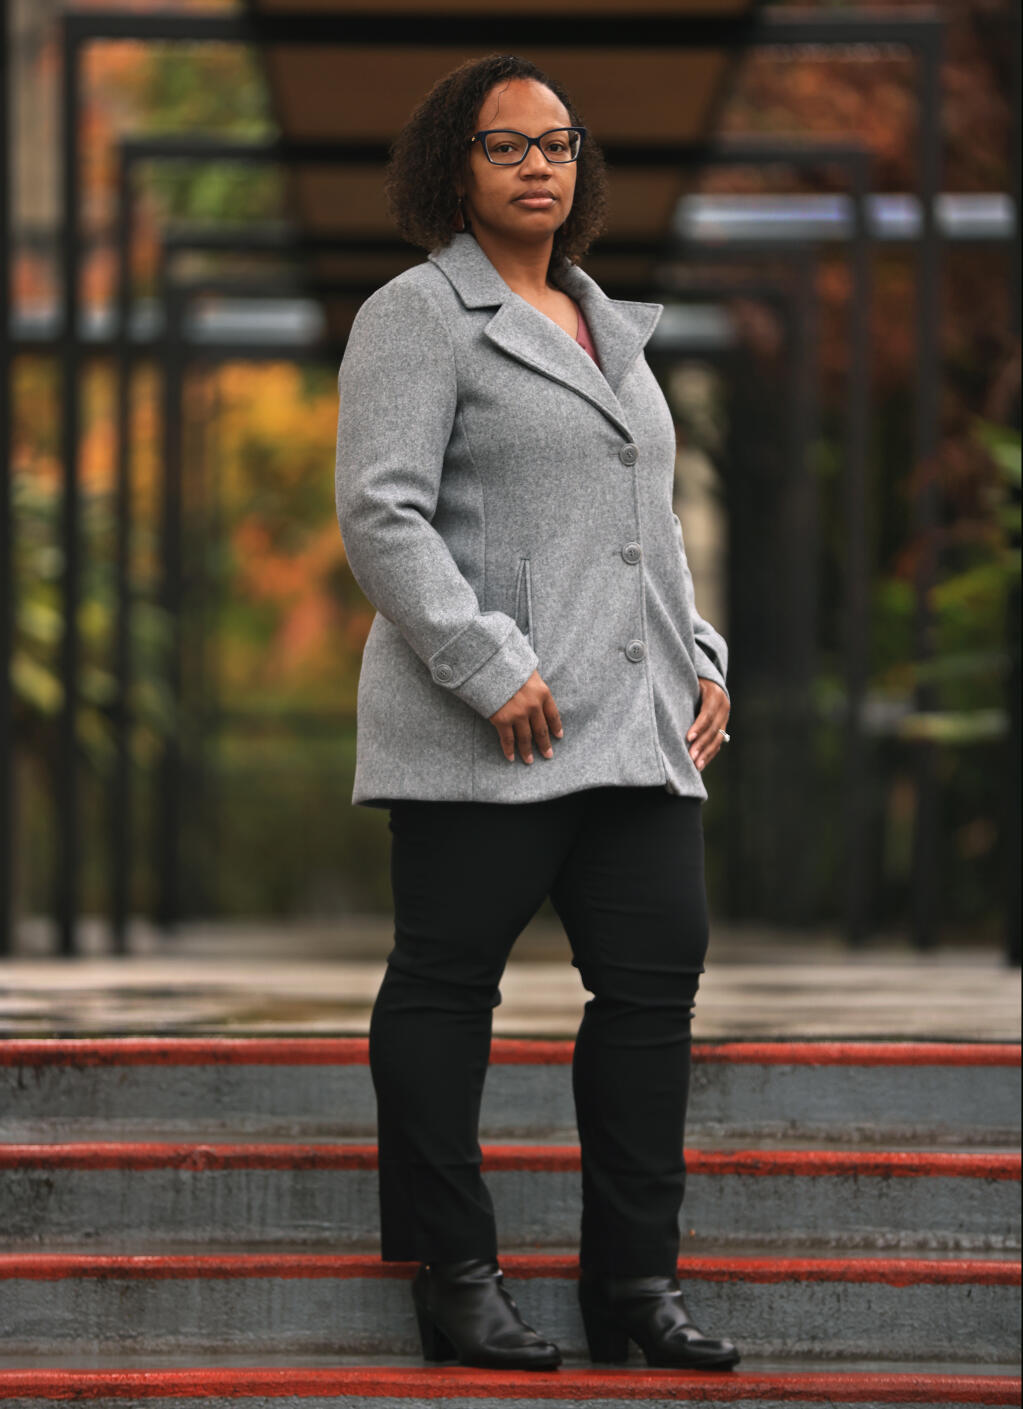 Santa Rosa Councilwoman Natalie Rogers, on the steps of City Hall, Tuesday, Nov. 9, 2021 (Kent Porter / The Press Democrat) 2021